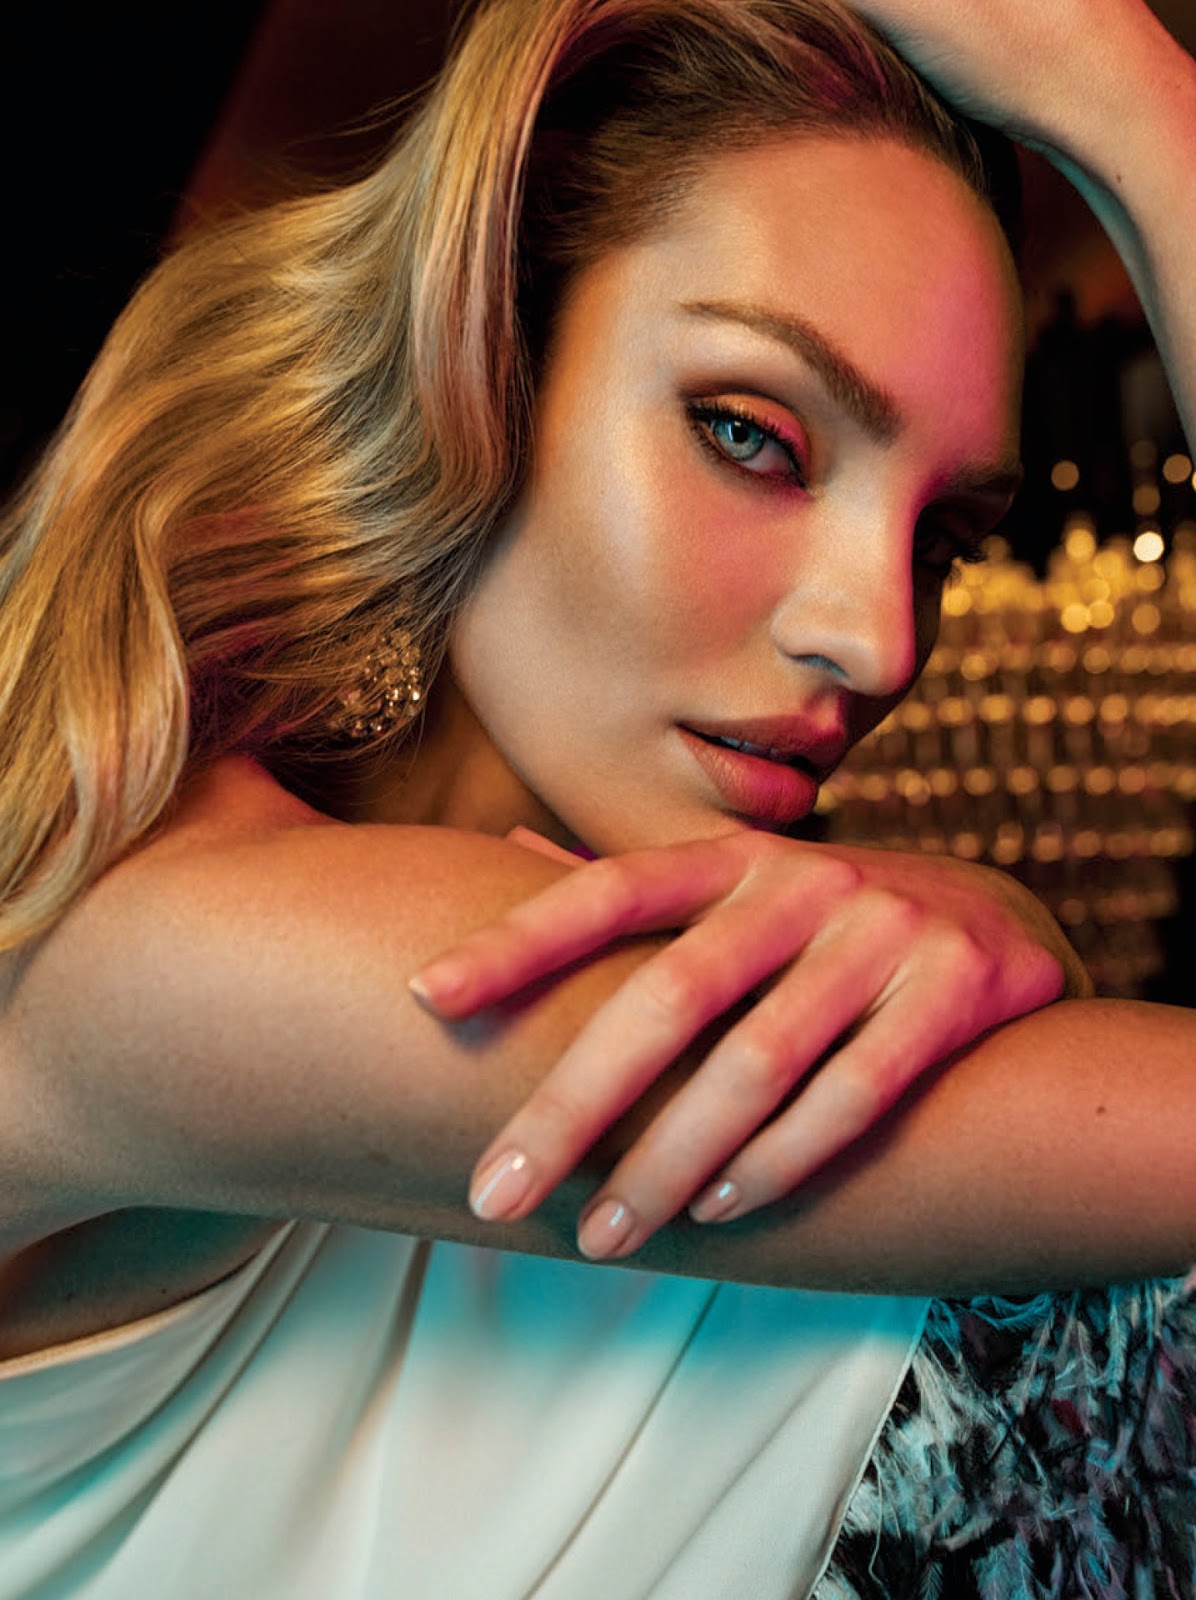 Candice Swanepoel pose sexy for Numero Magazine photoshoot